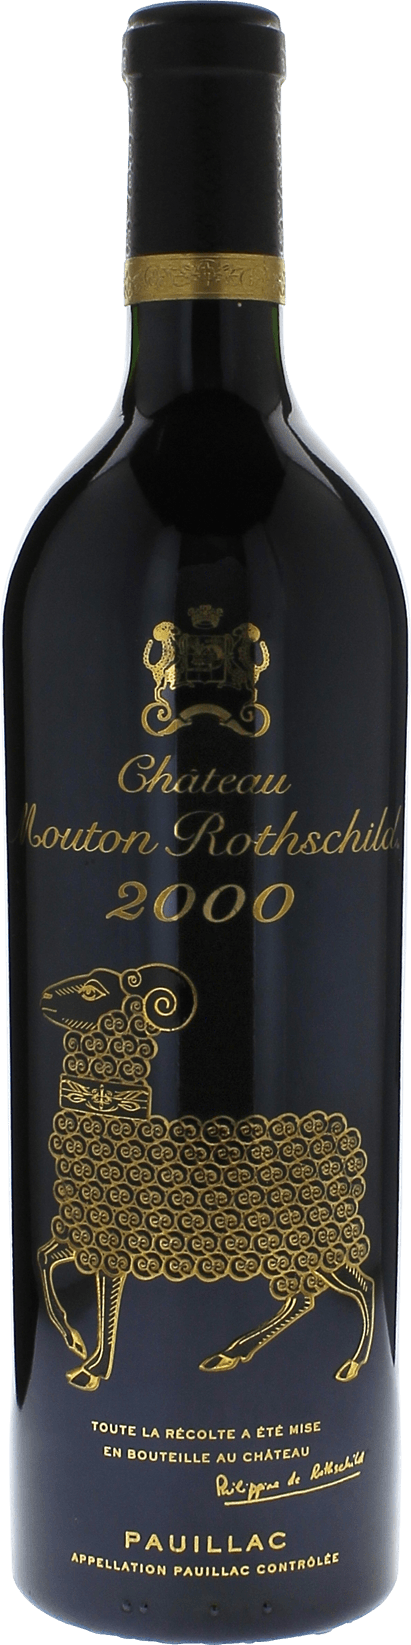 Mouton rothschild 2000 1er Grand cru class Pauillac, Bordeaux rouge